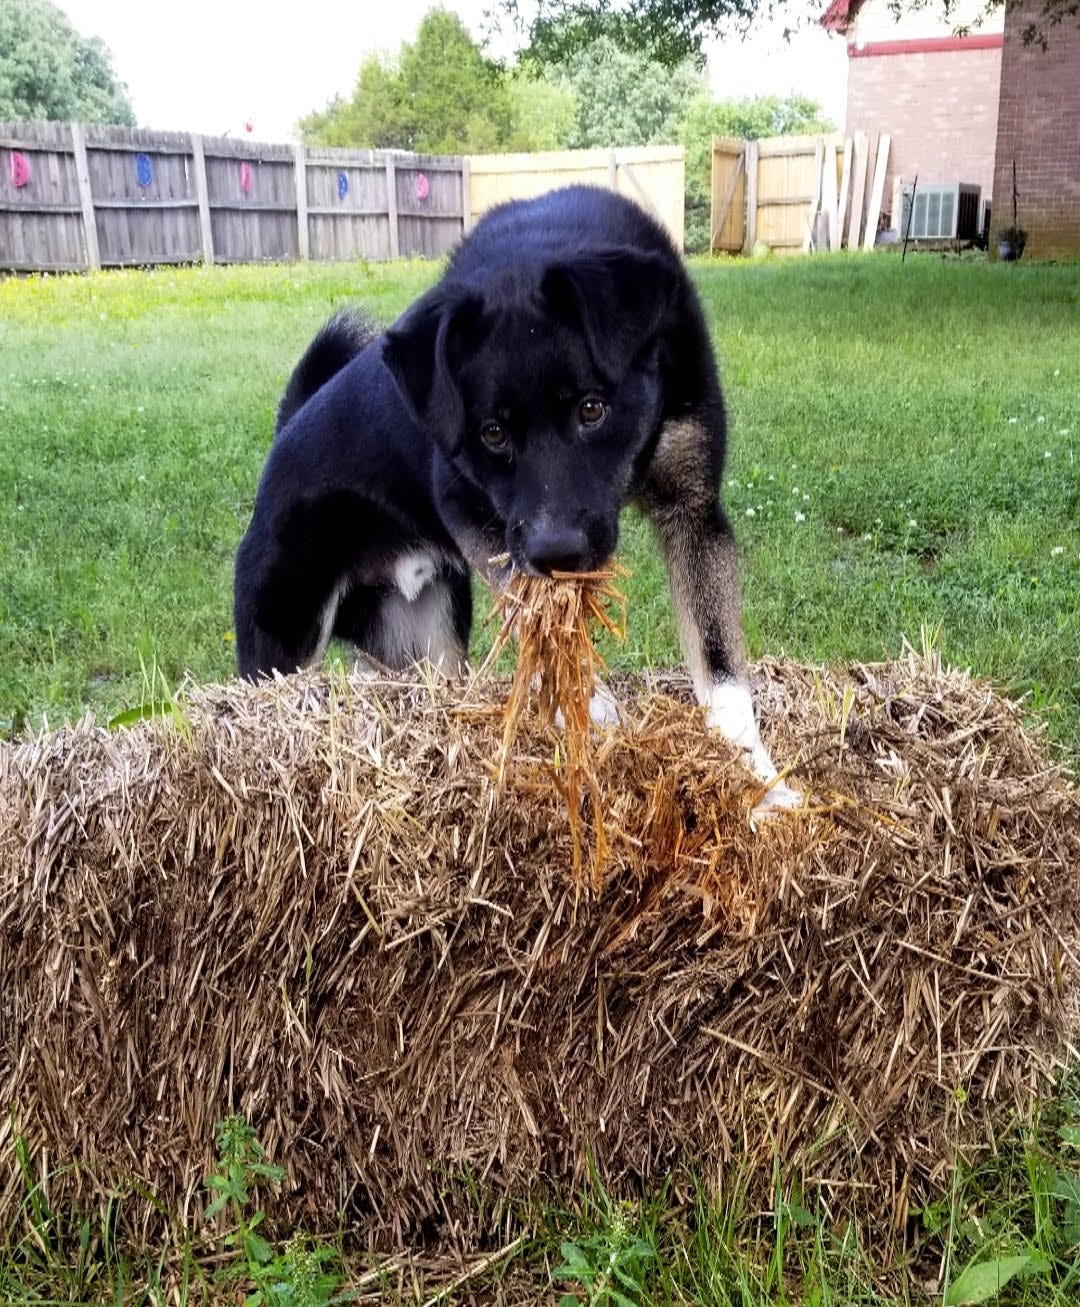 Black dog chewing hay in a grassy backyard